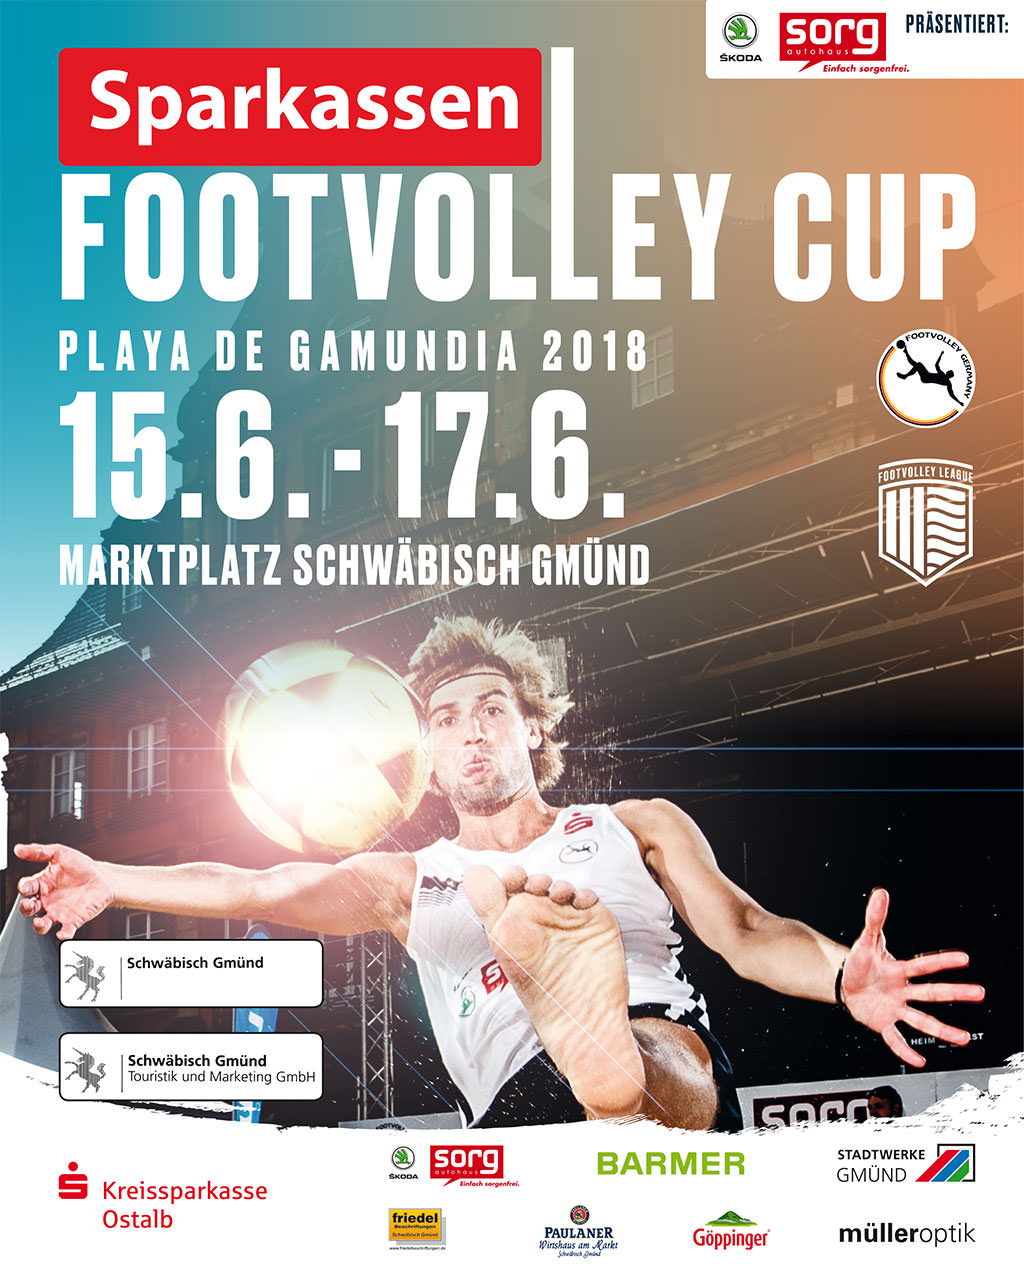 Playa de Gamundia 2018 – Sparkassen Footvolley Cup